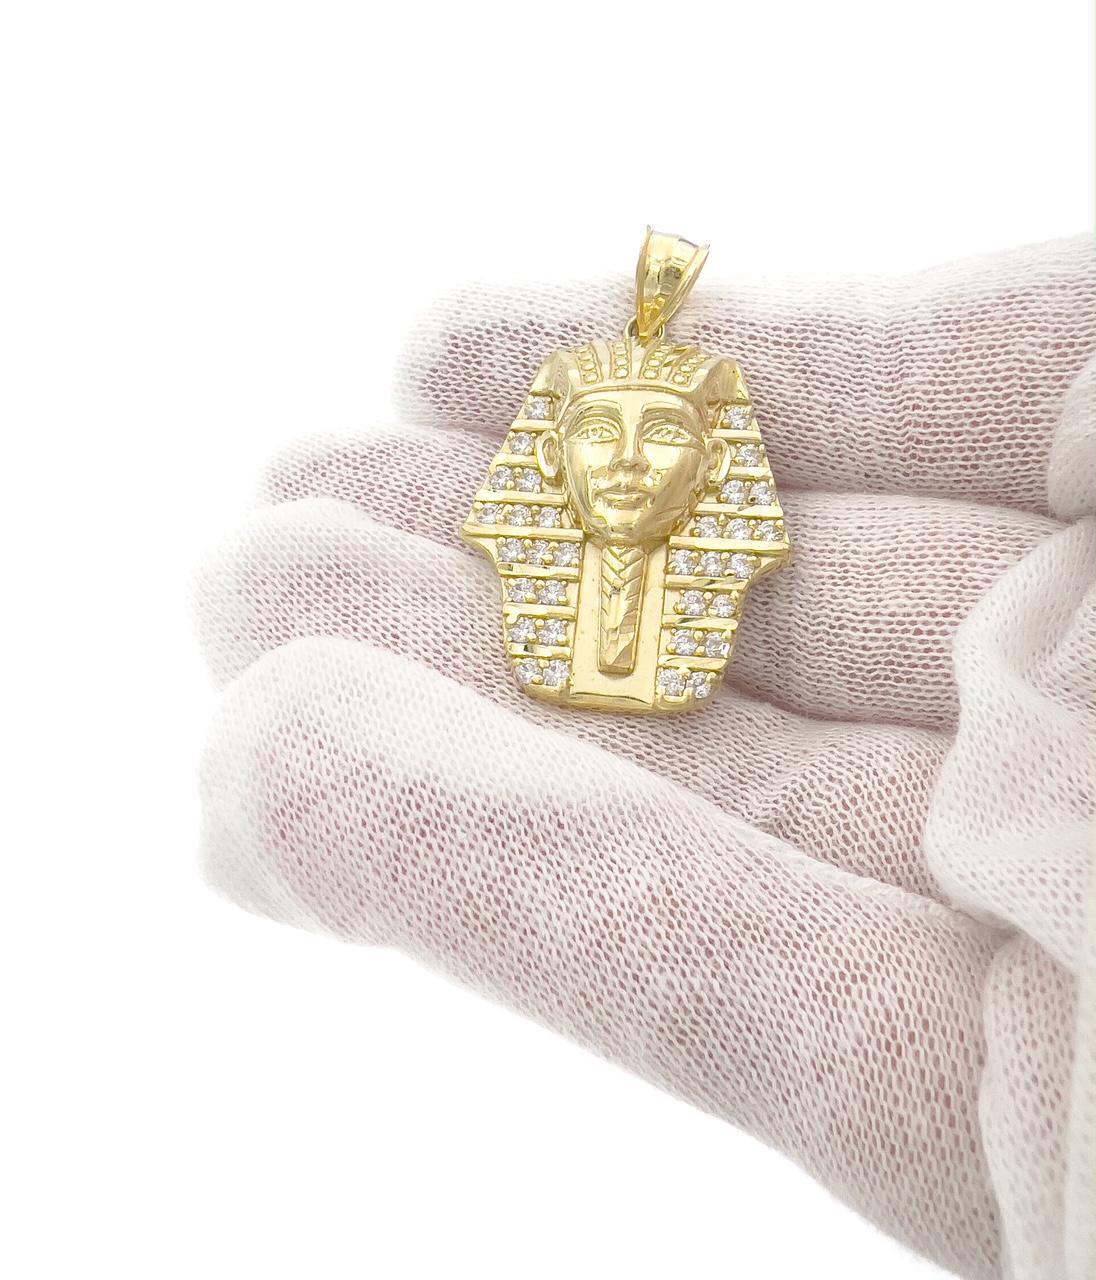 10k Yellow Gold Egyptian Pharaoh King Pendant Charm